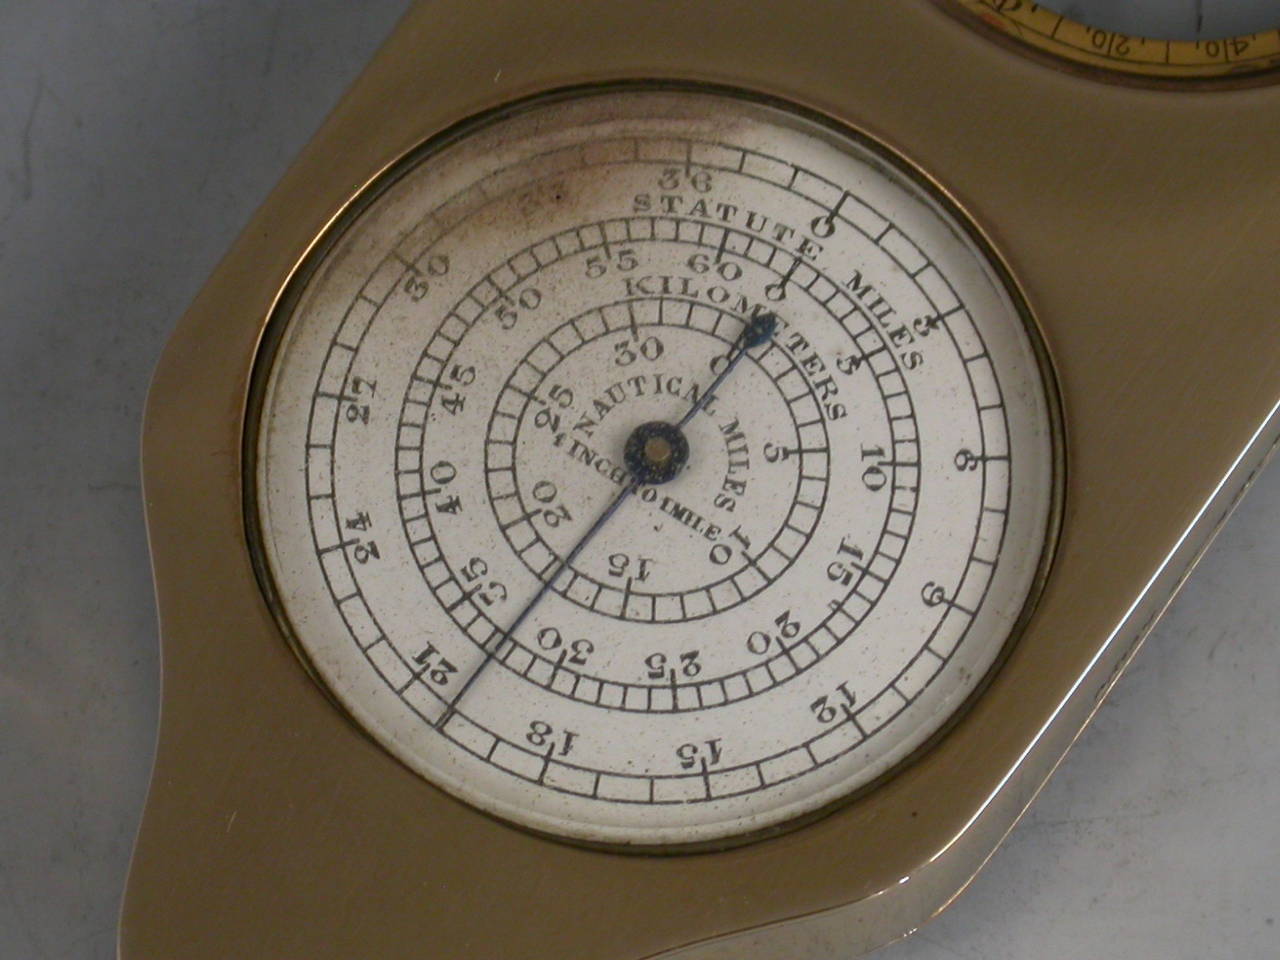 Edwardian Cased Nine-Karat Gold Opisometer or Compass or Map Measuring Tool 3